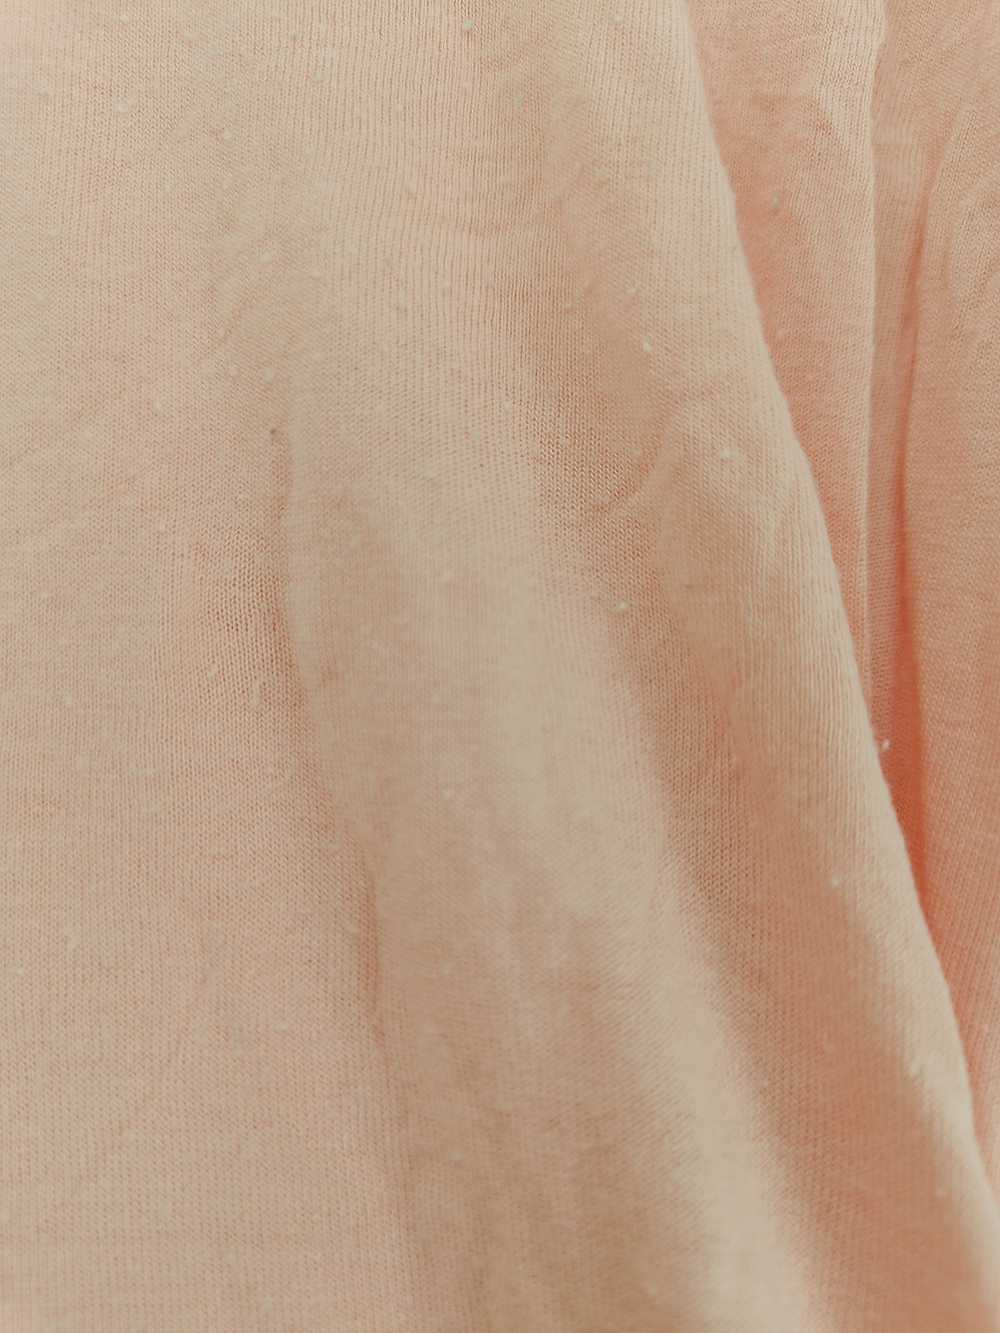 American Apparel Women's T-Shirt M Pink 100% Visc… - image 6